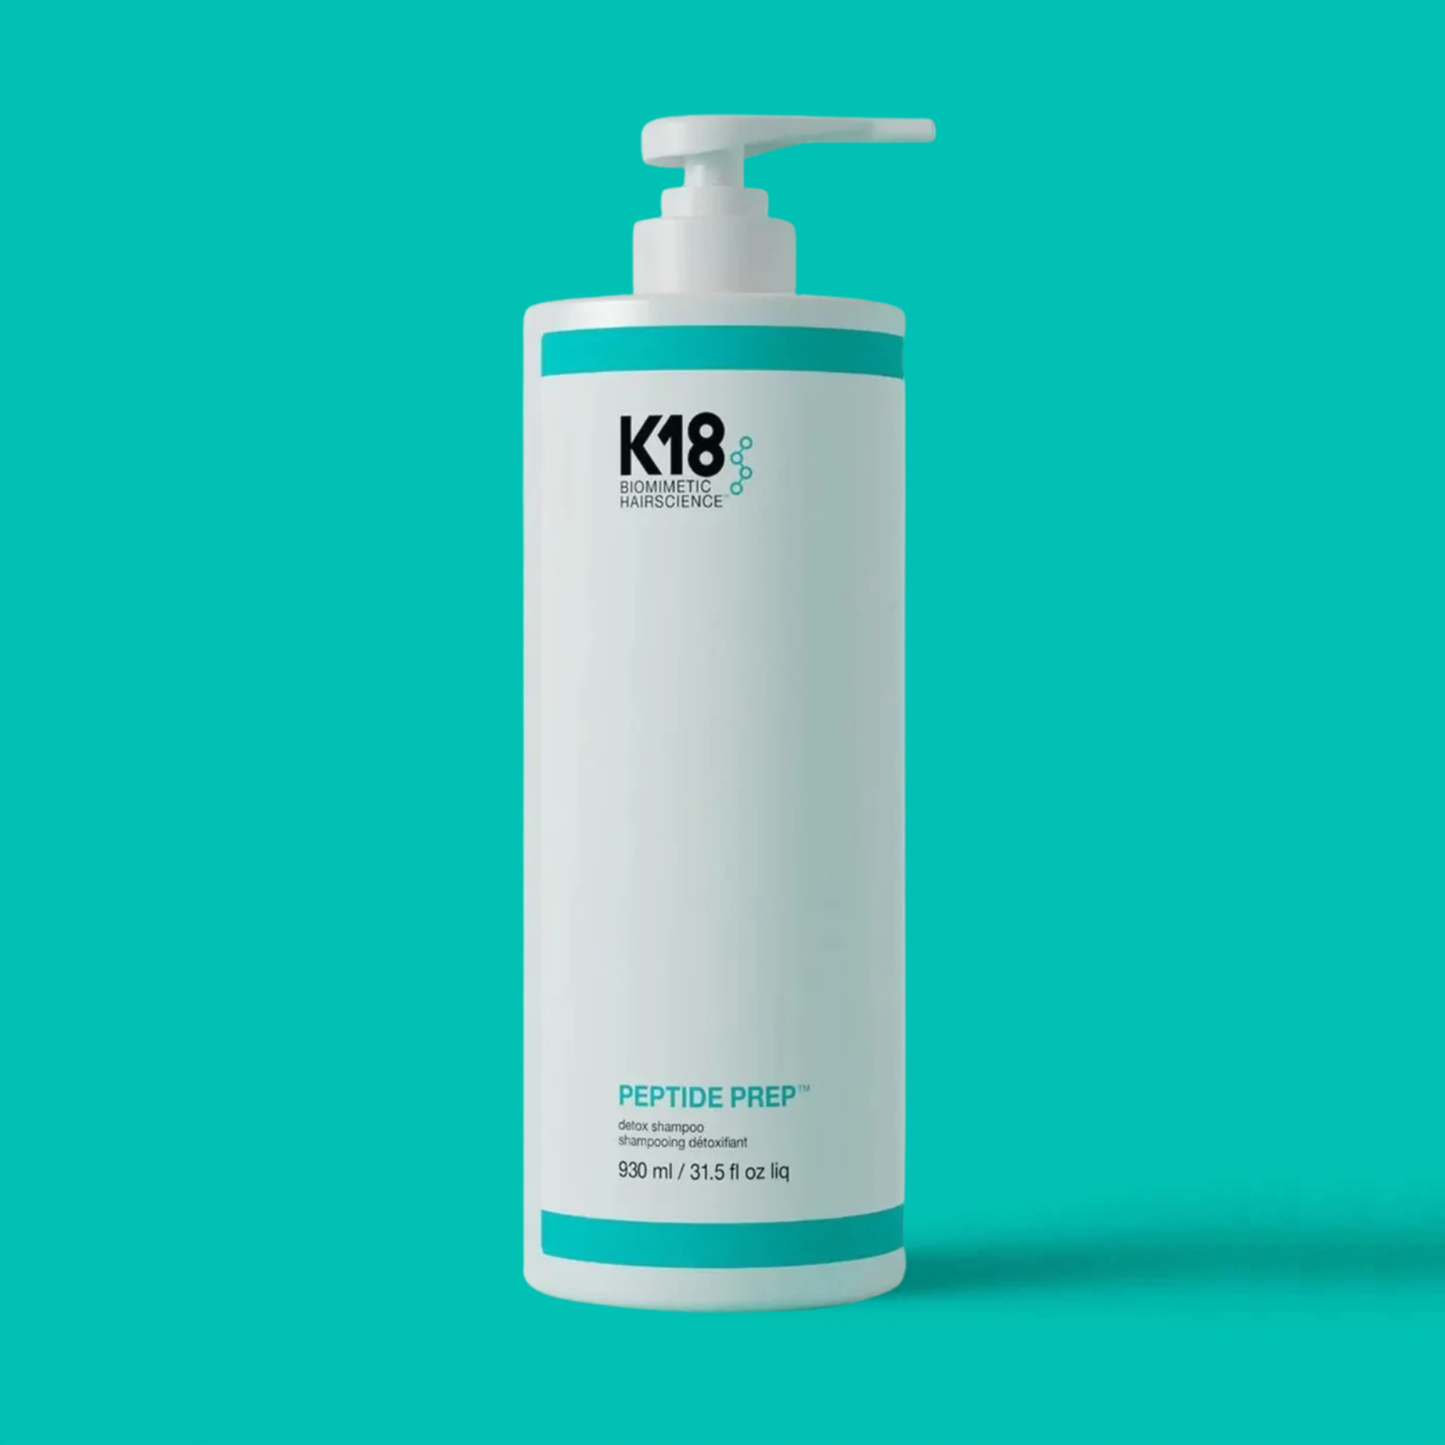 Rucci Professional - K18-40038  K18 Peptide Prep Detox Shampoo (930mL)